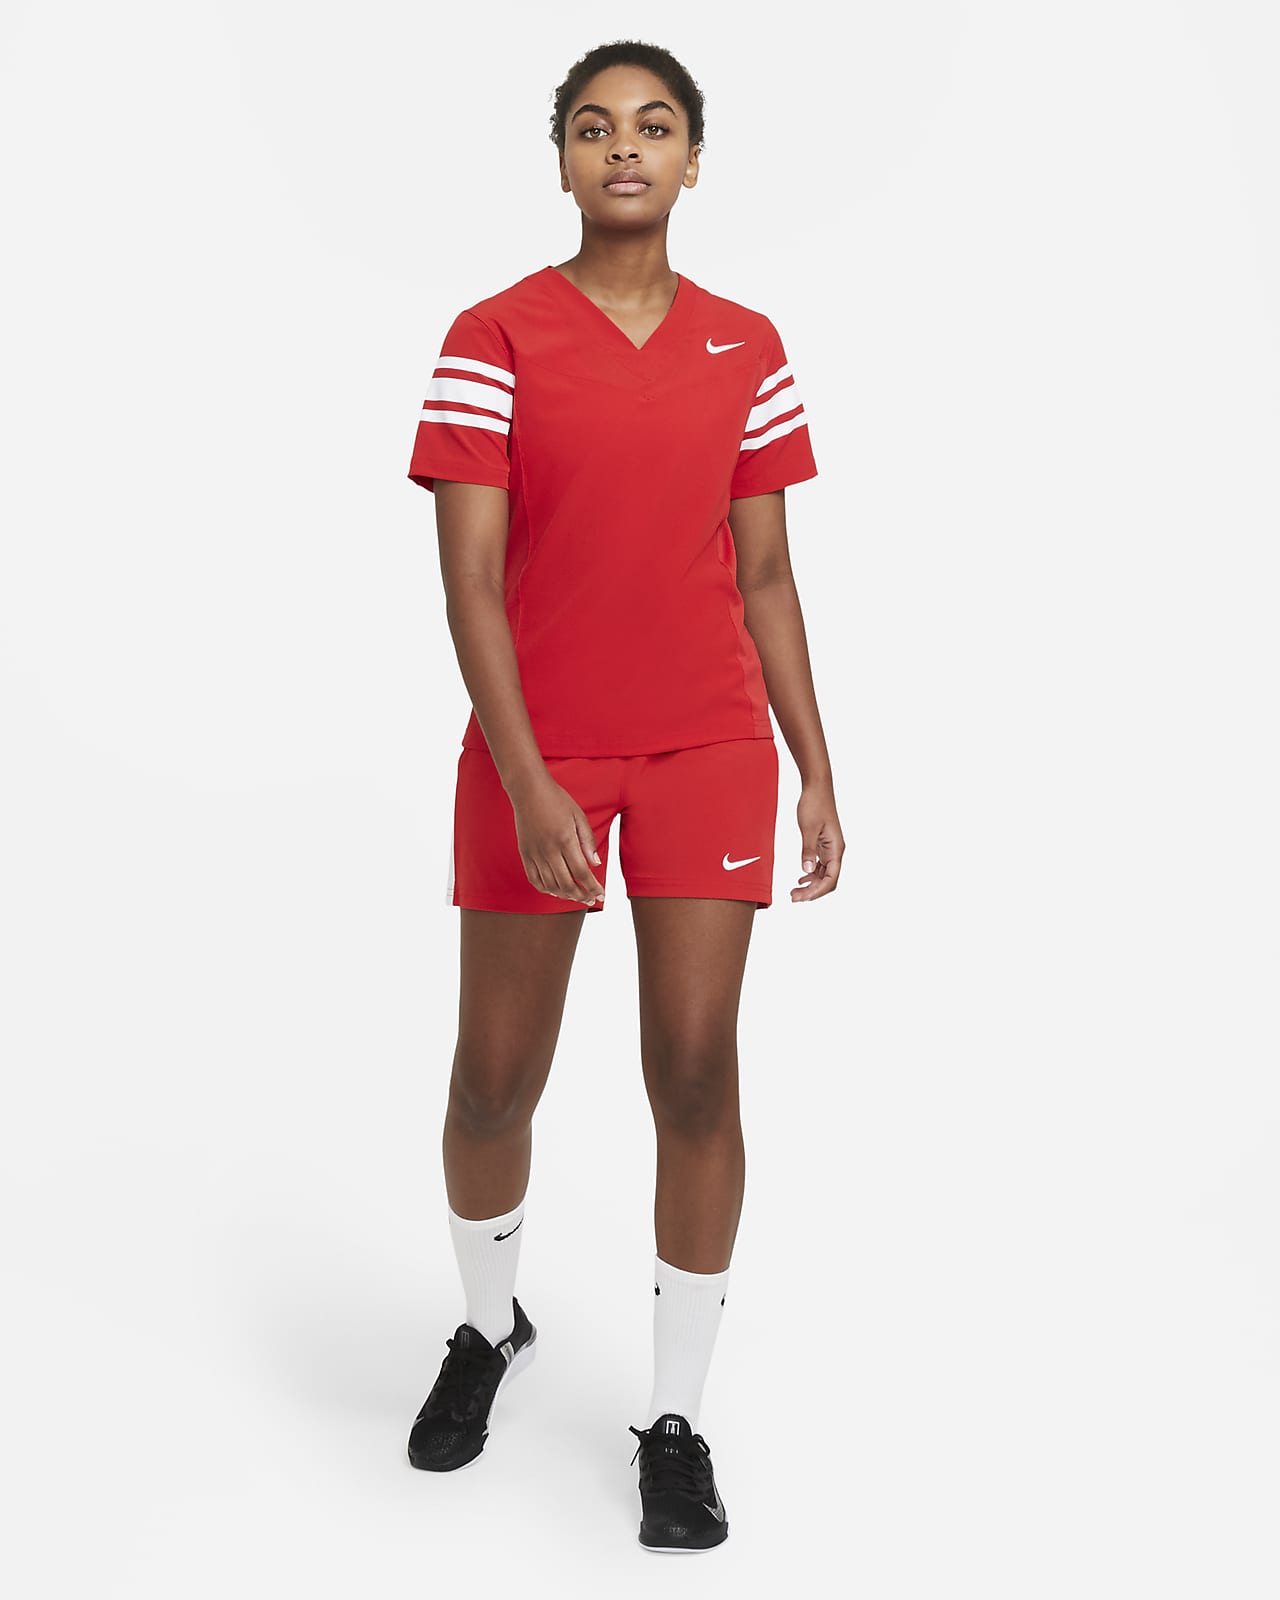 Nike Stock Flag Football Jersey, Flagshirt